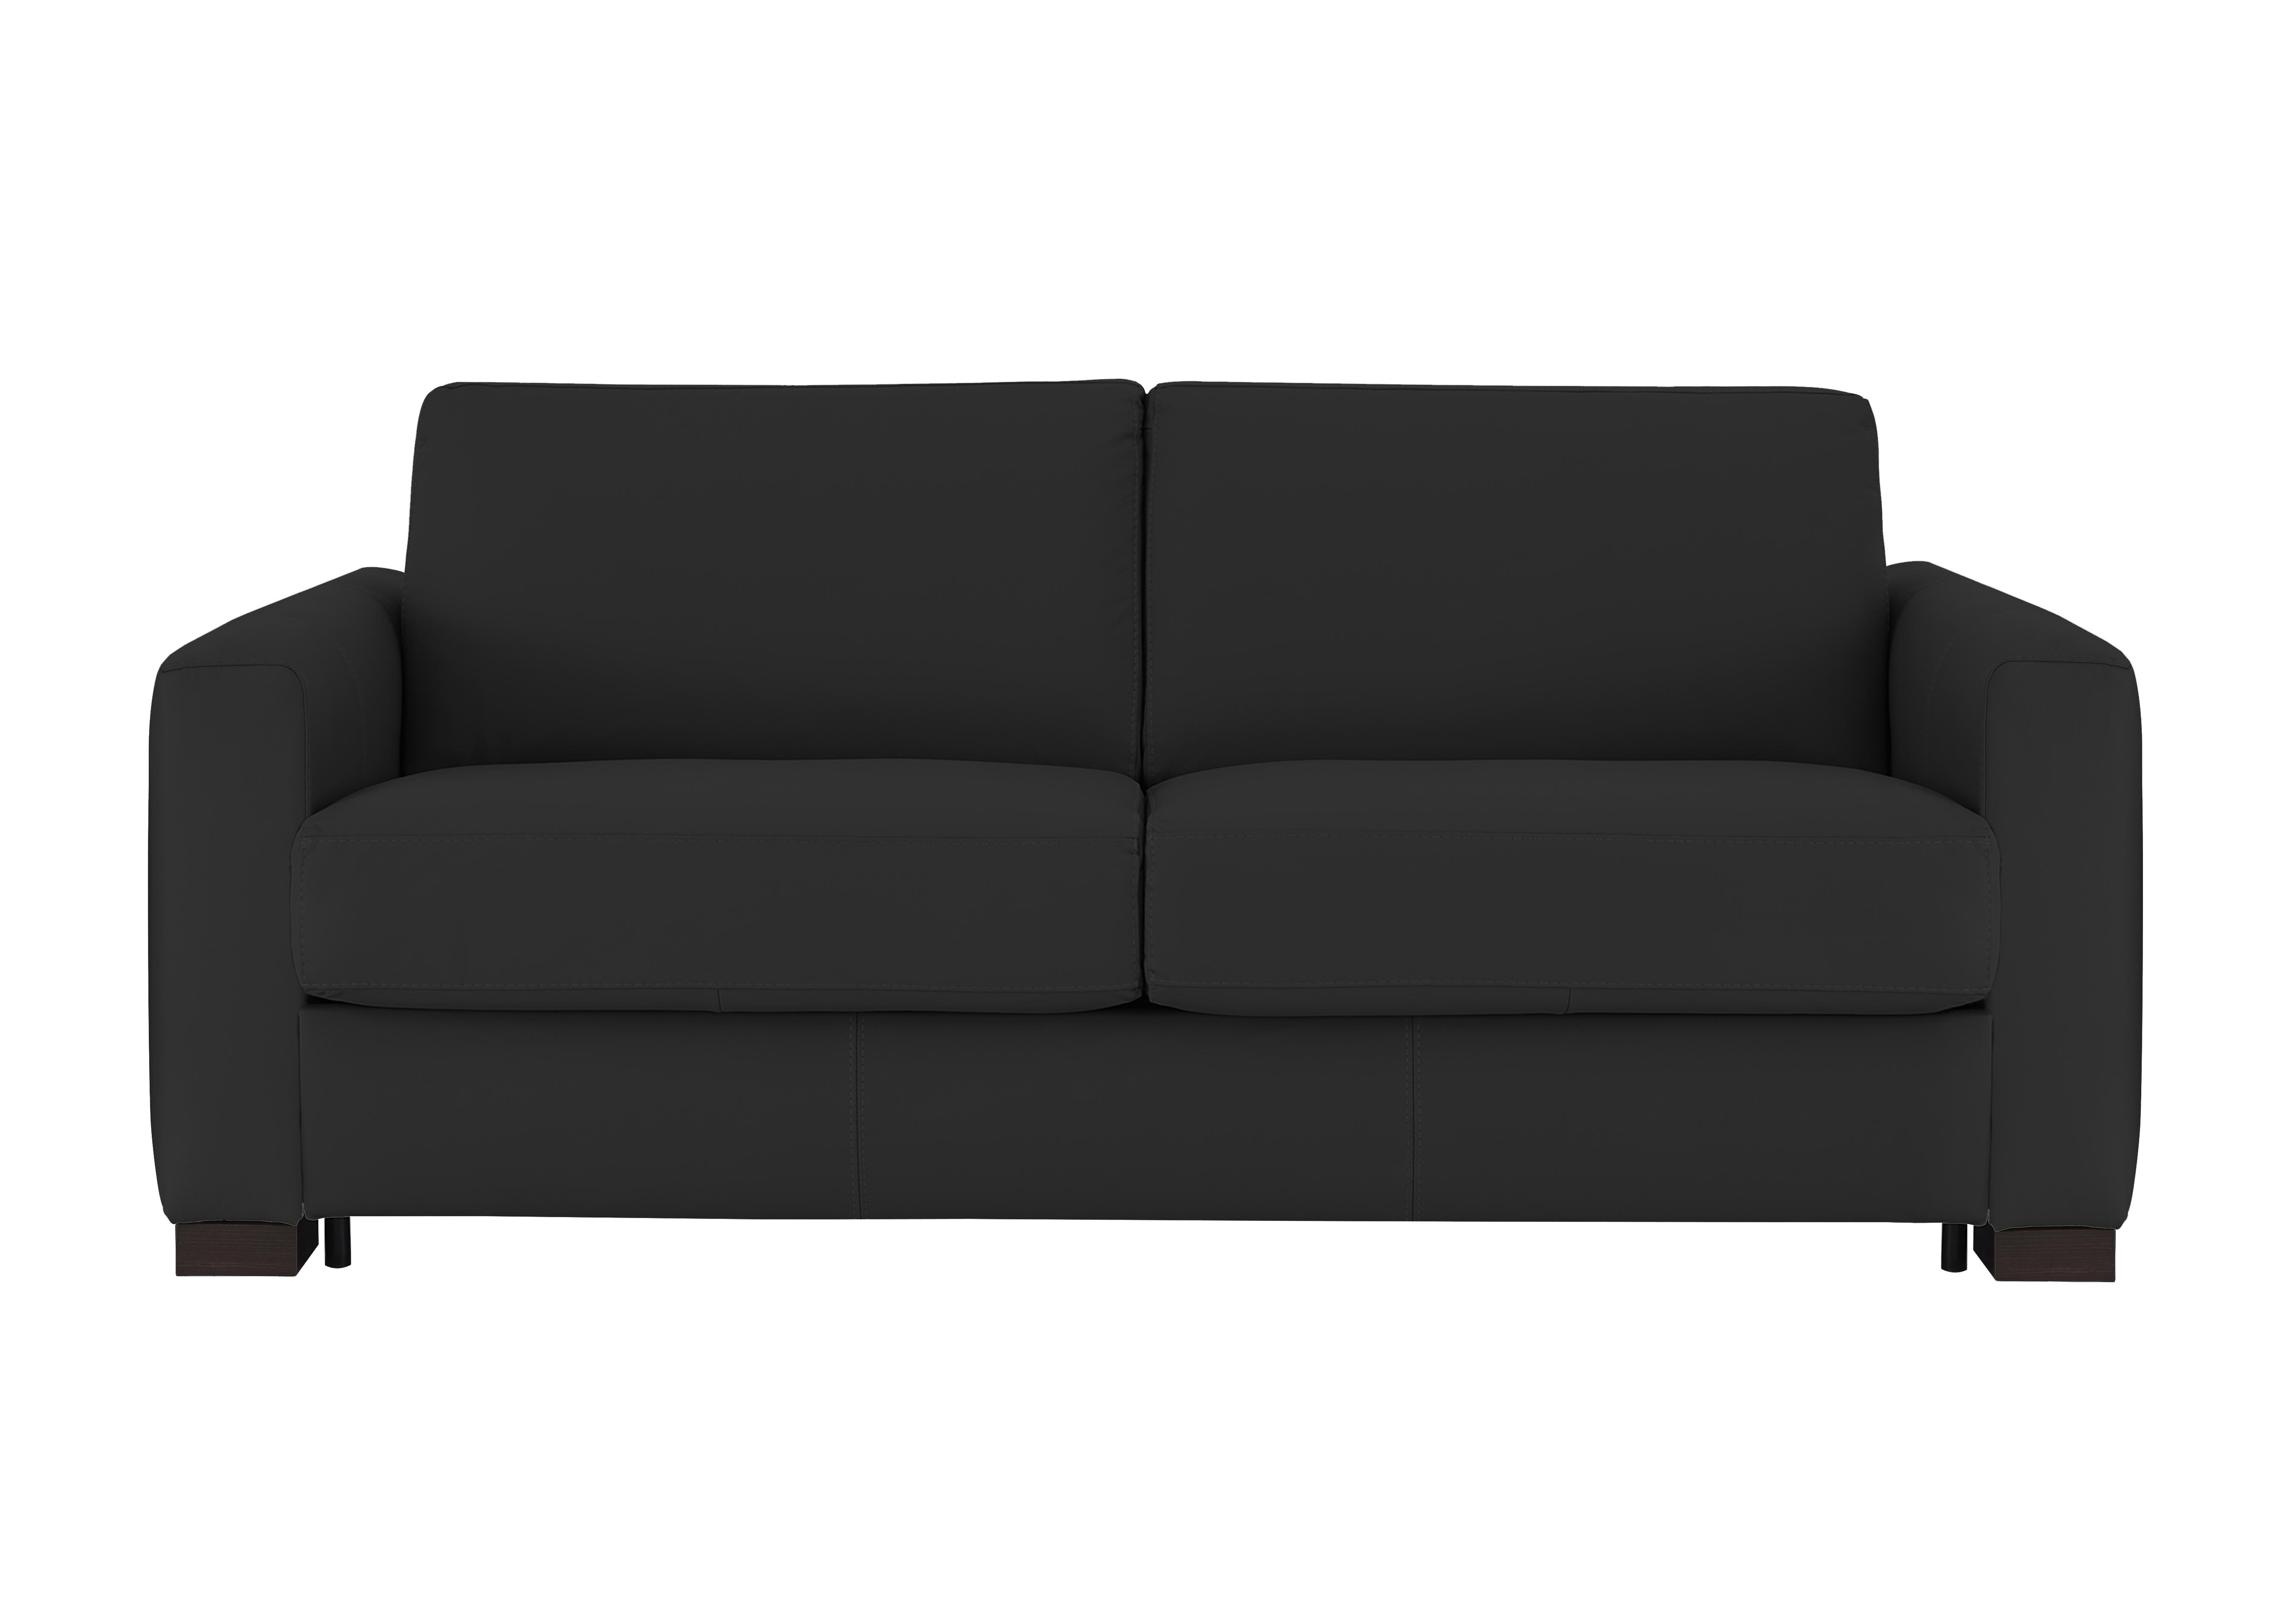 Alcova 3 Seater Leather Sofa Bed with Box Arms in Torello Nero 71 on Furniture Village